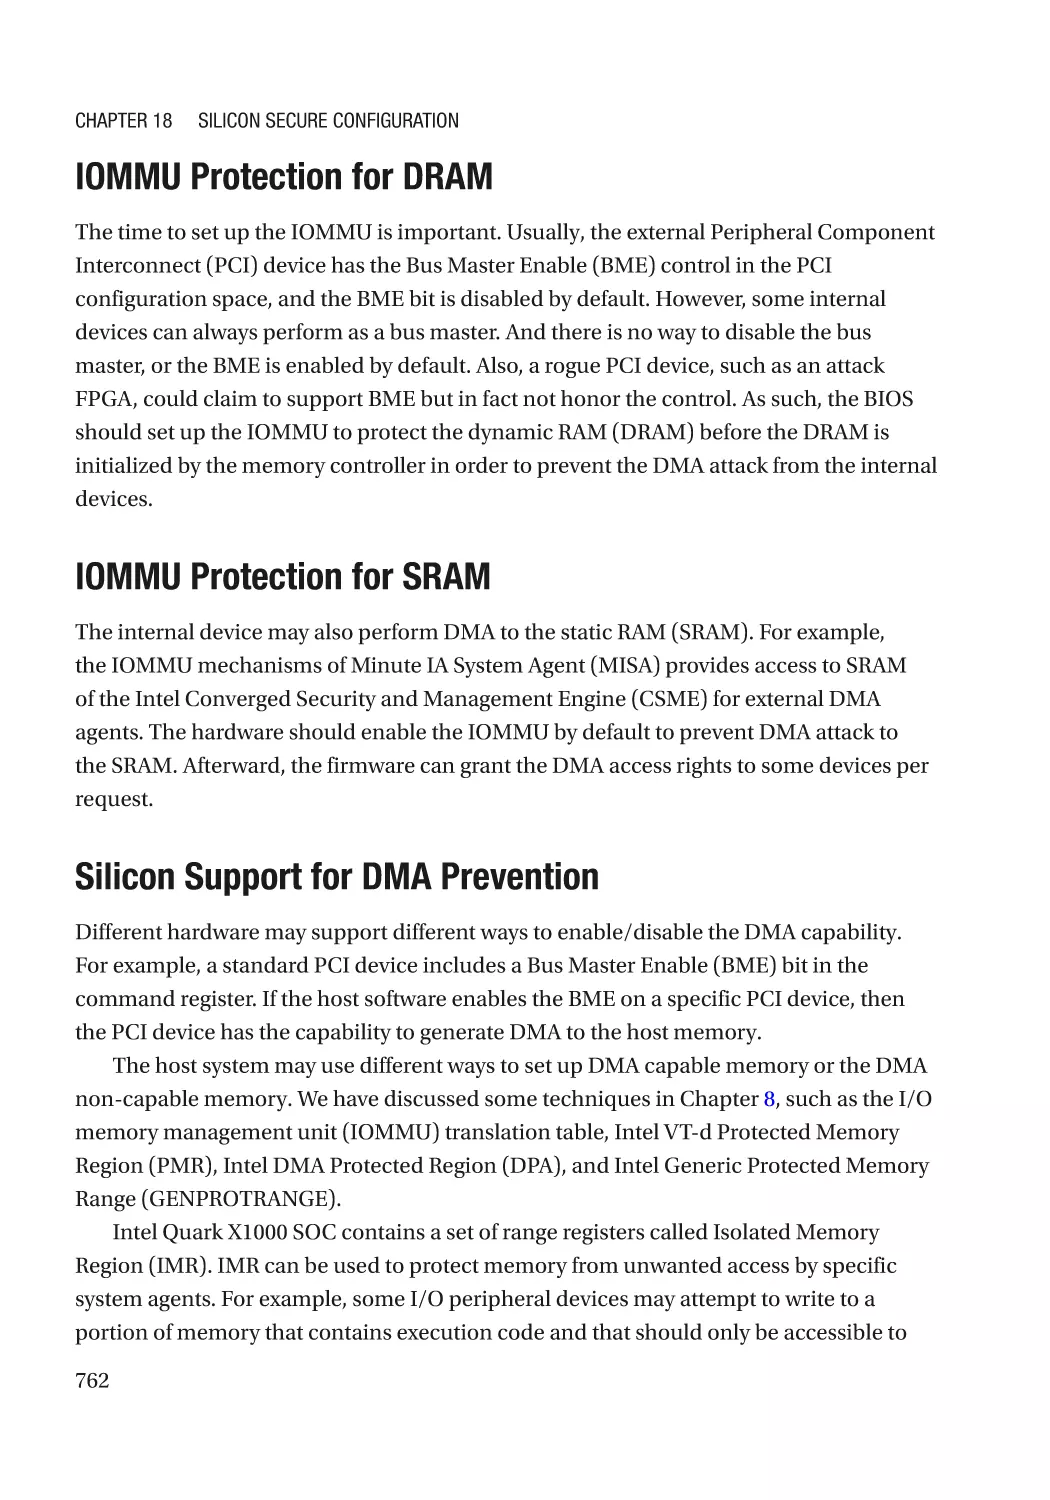 IOMMU Protection for DRAM
IOMMU Protection for SRAM
Silicon Support for DMA Prevention